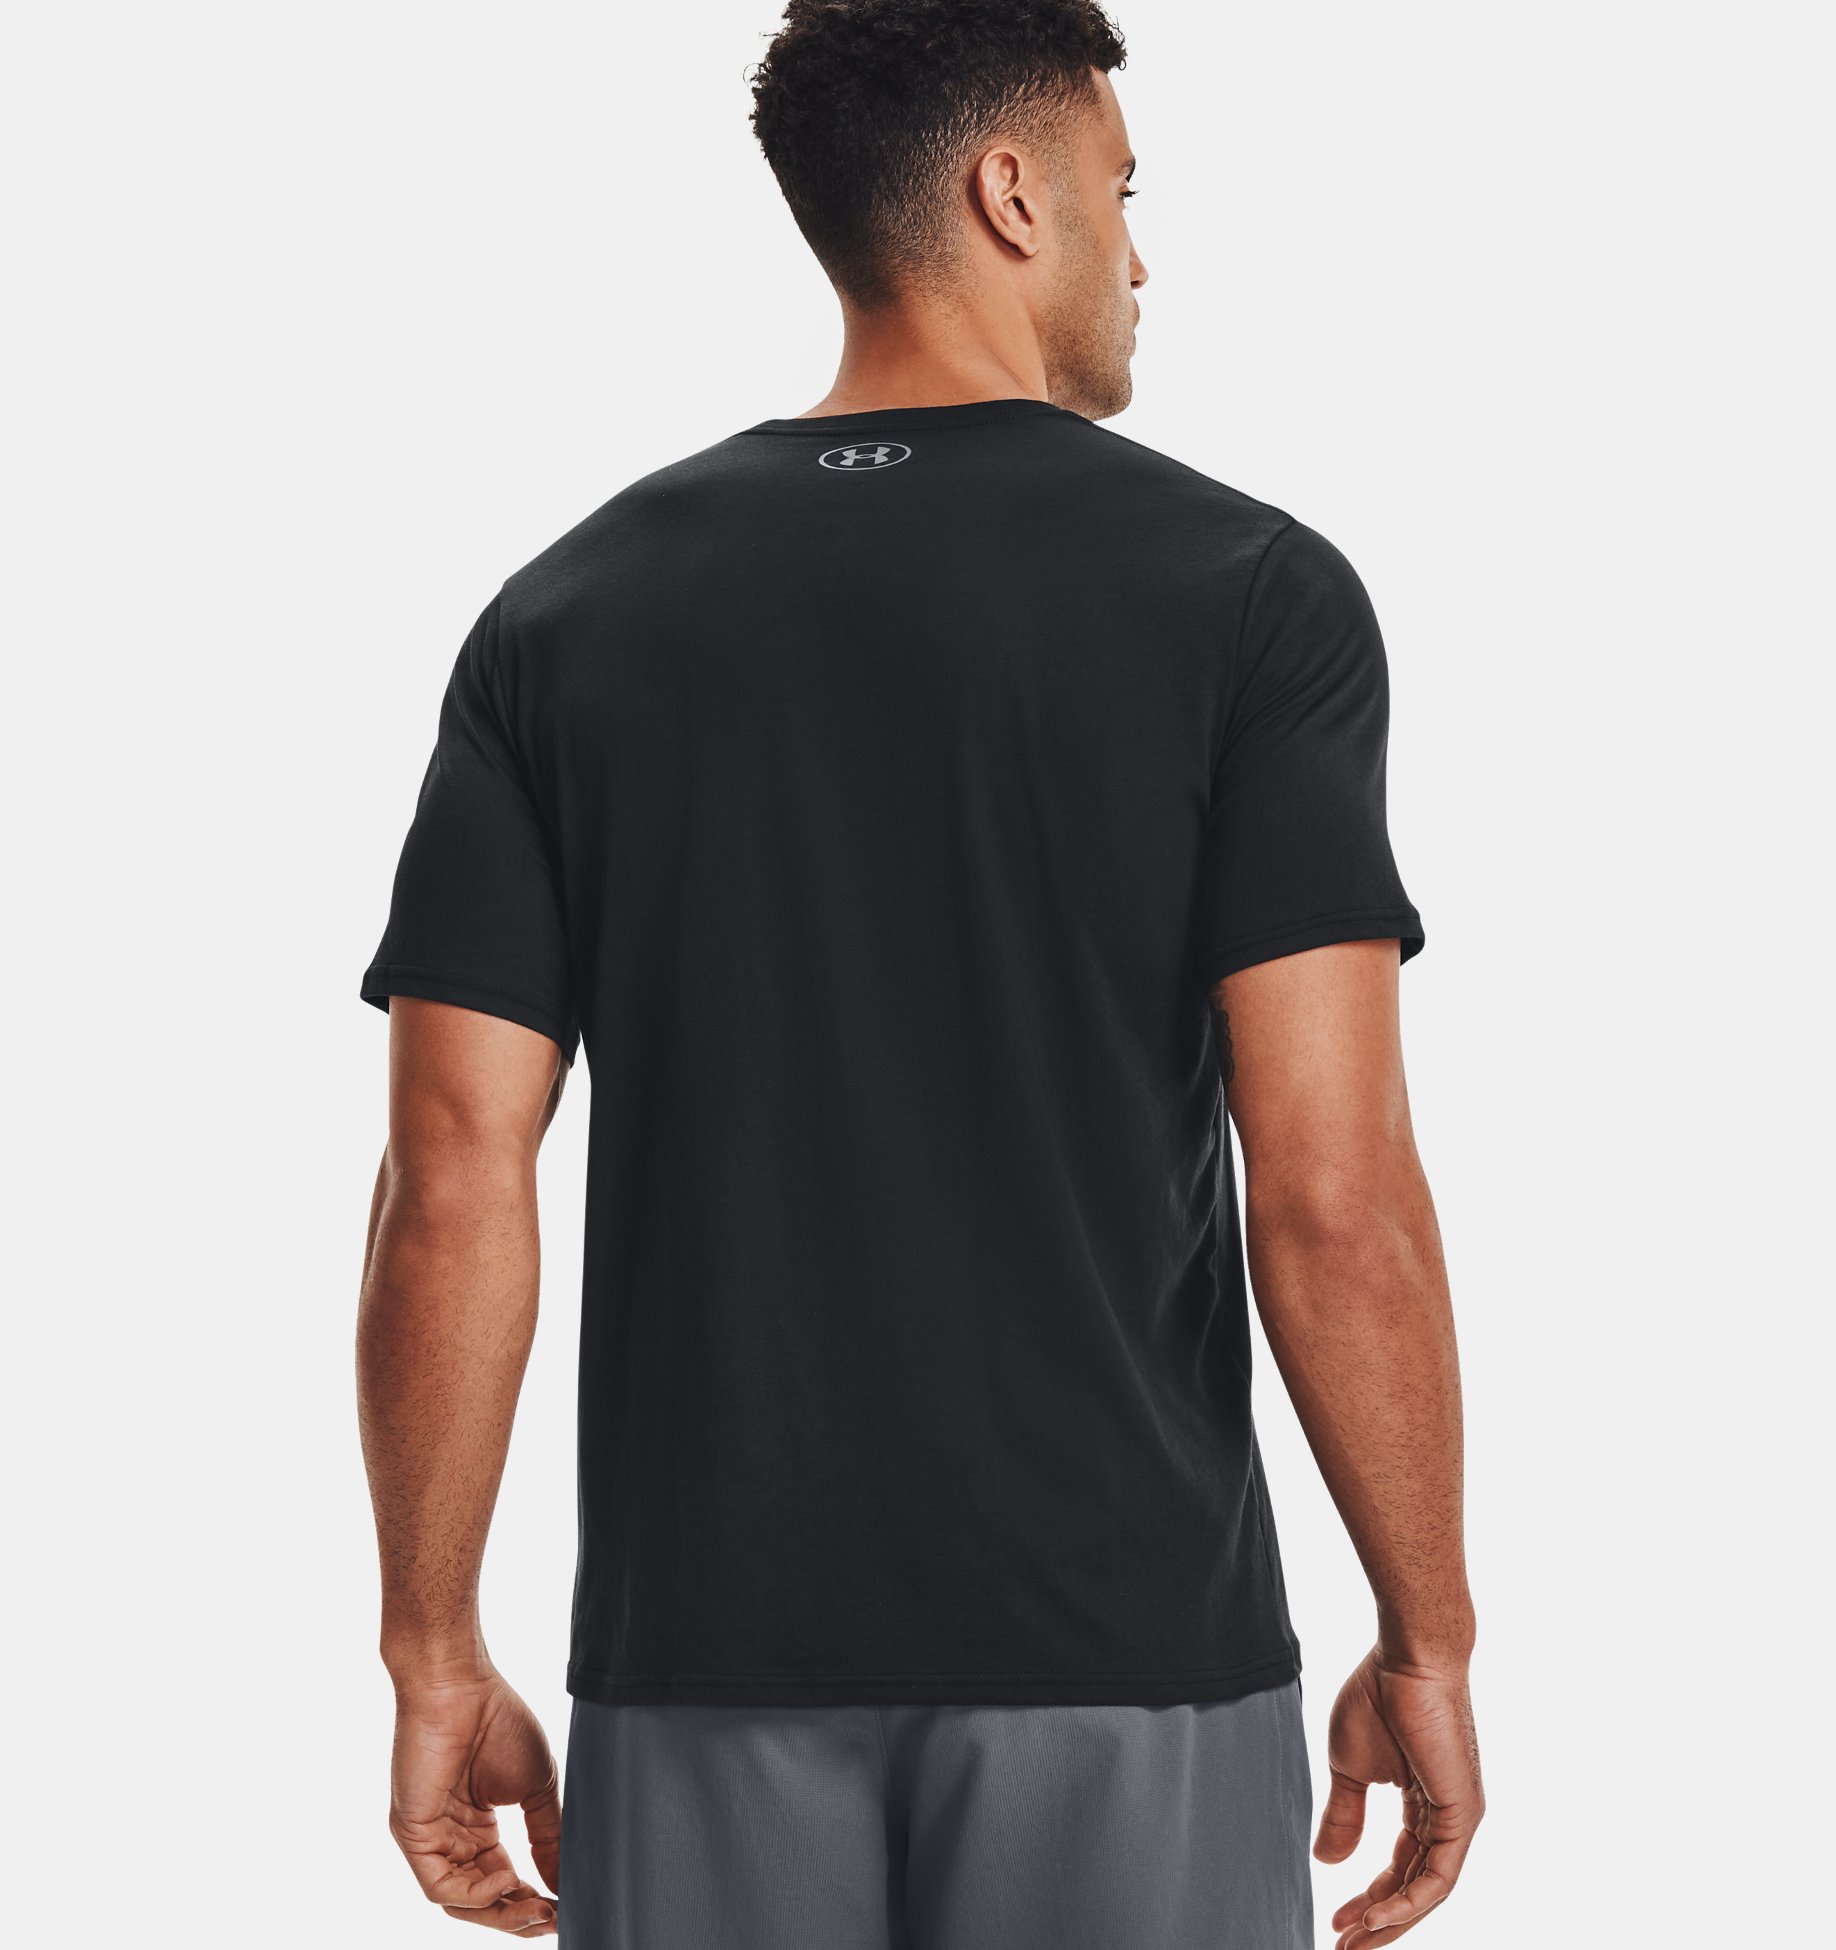 Under Armour Mens Sport Style Short-Sleeve Shirt 